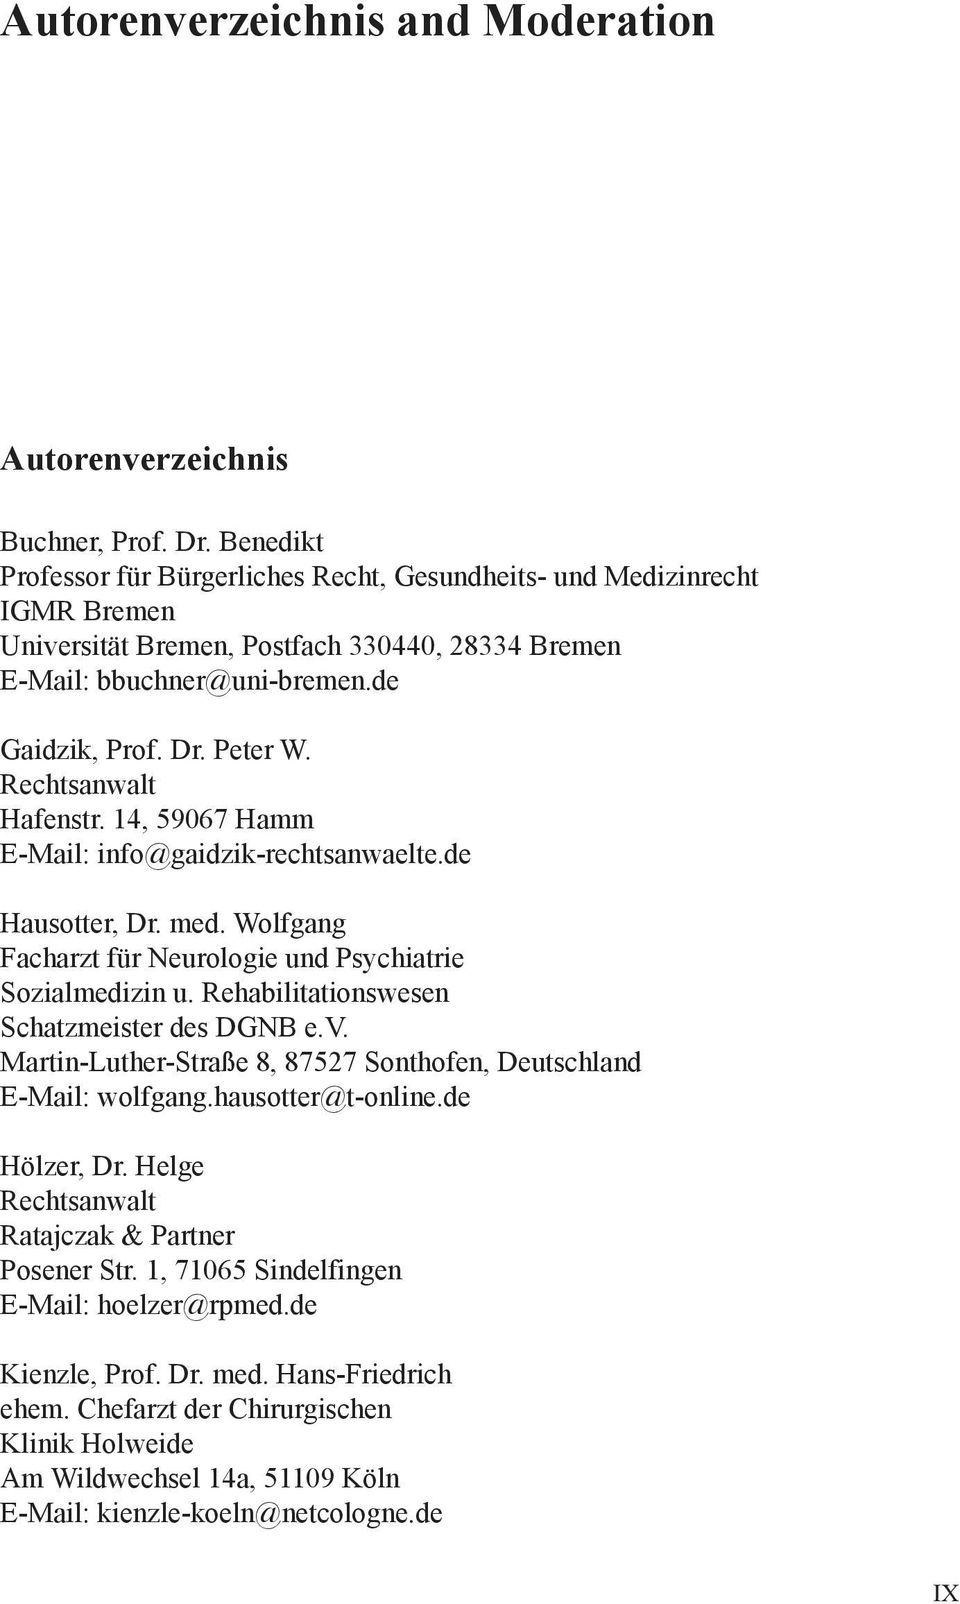 Rechtsanwalt Hafenstr. 14, 59067 Hamm E-Mail: info@gaidzik-rechtsanwaelte.de Hausotter, Dr. med. Wolfgang Facharzt für Neurologie und Psychiatrie Sozialmedizin u.